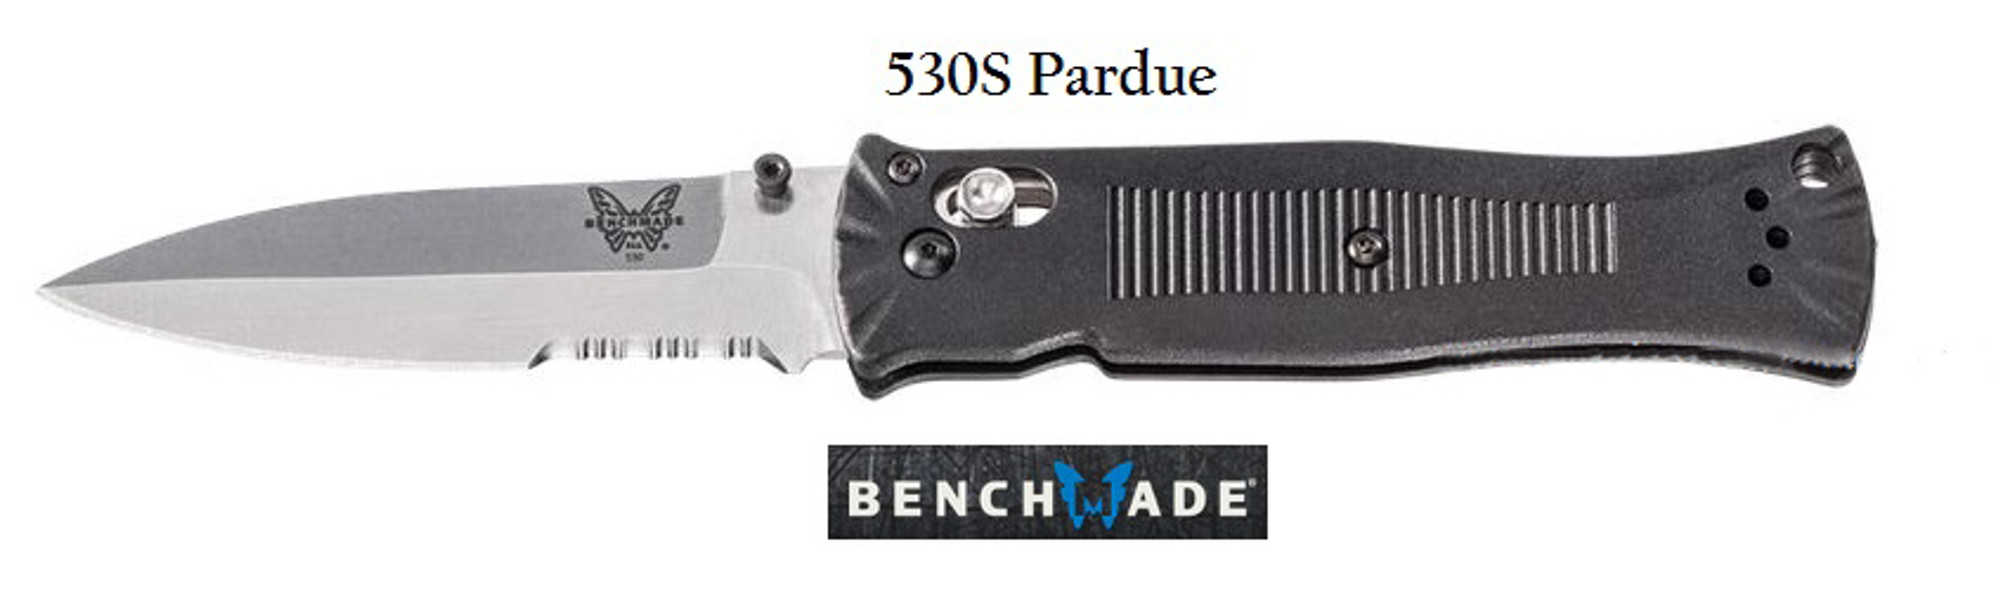 Benchmade 530S Pardue Spear Point Satin w/ Serration